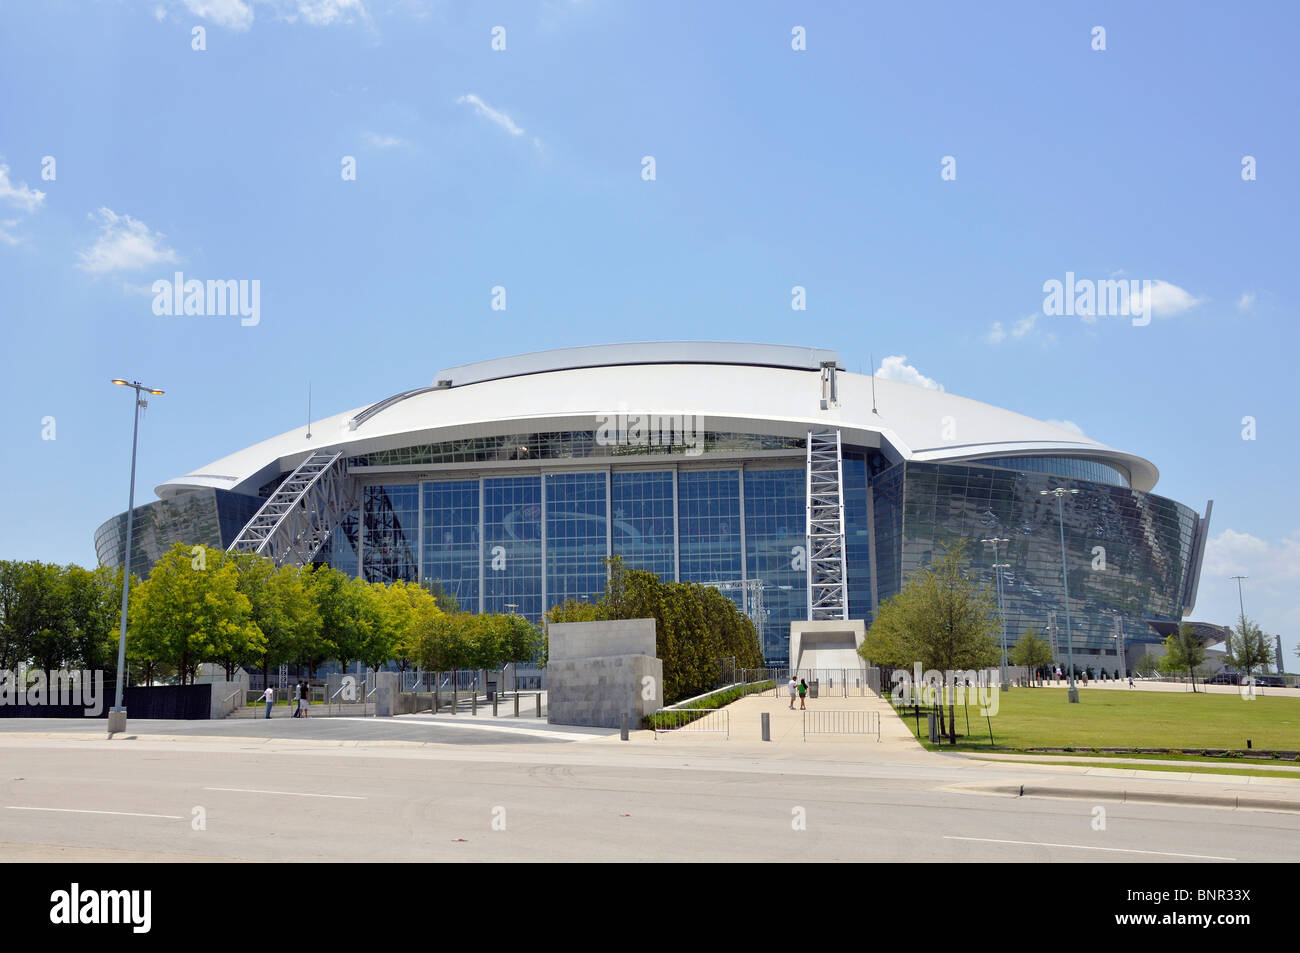 New Dallas Cowboys football stadium, Texas, USA Stock Photo